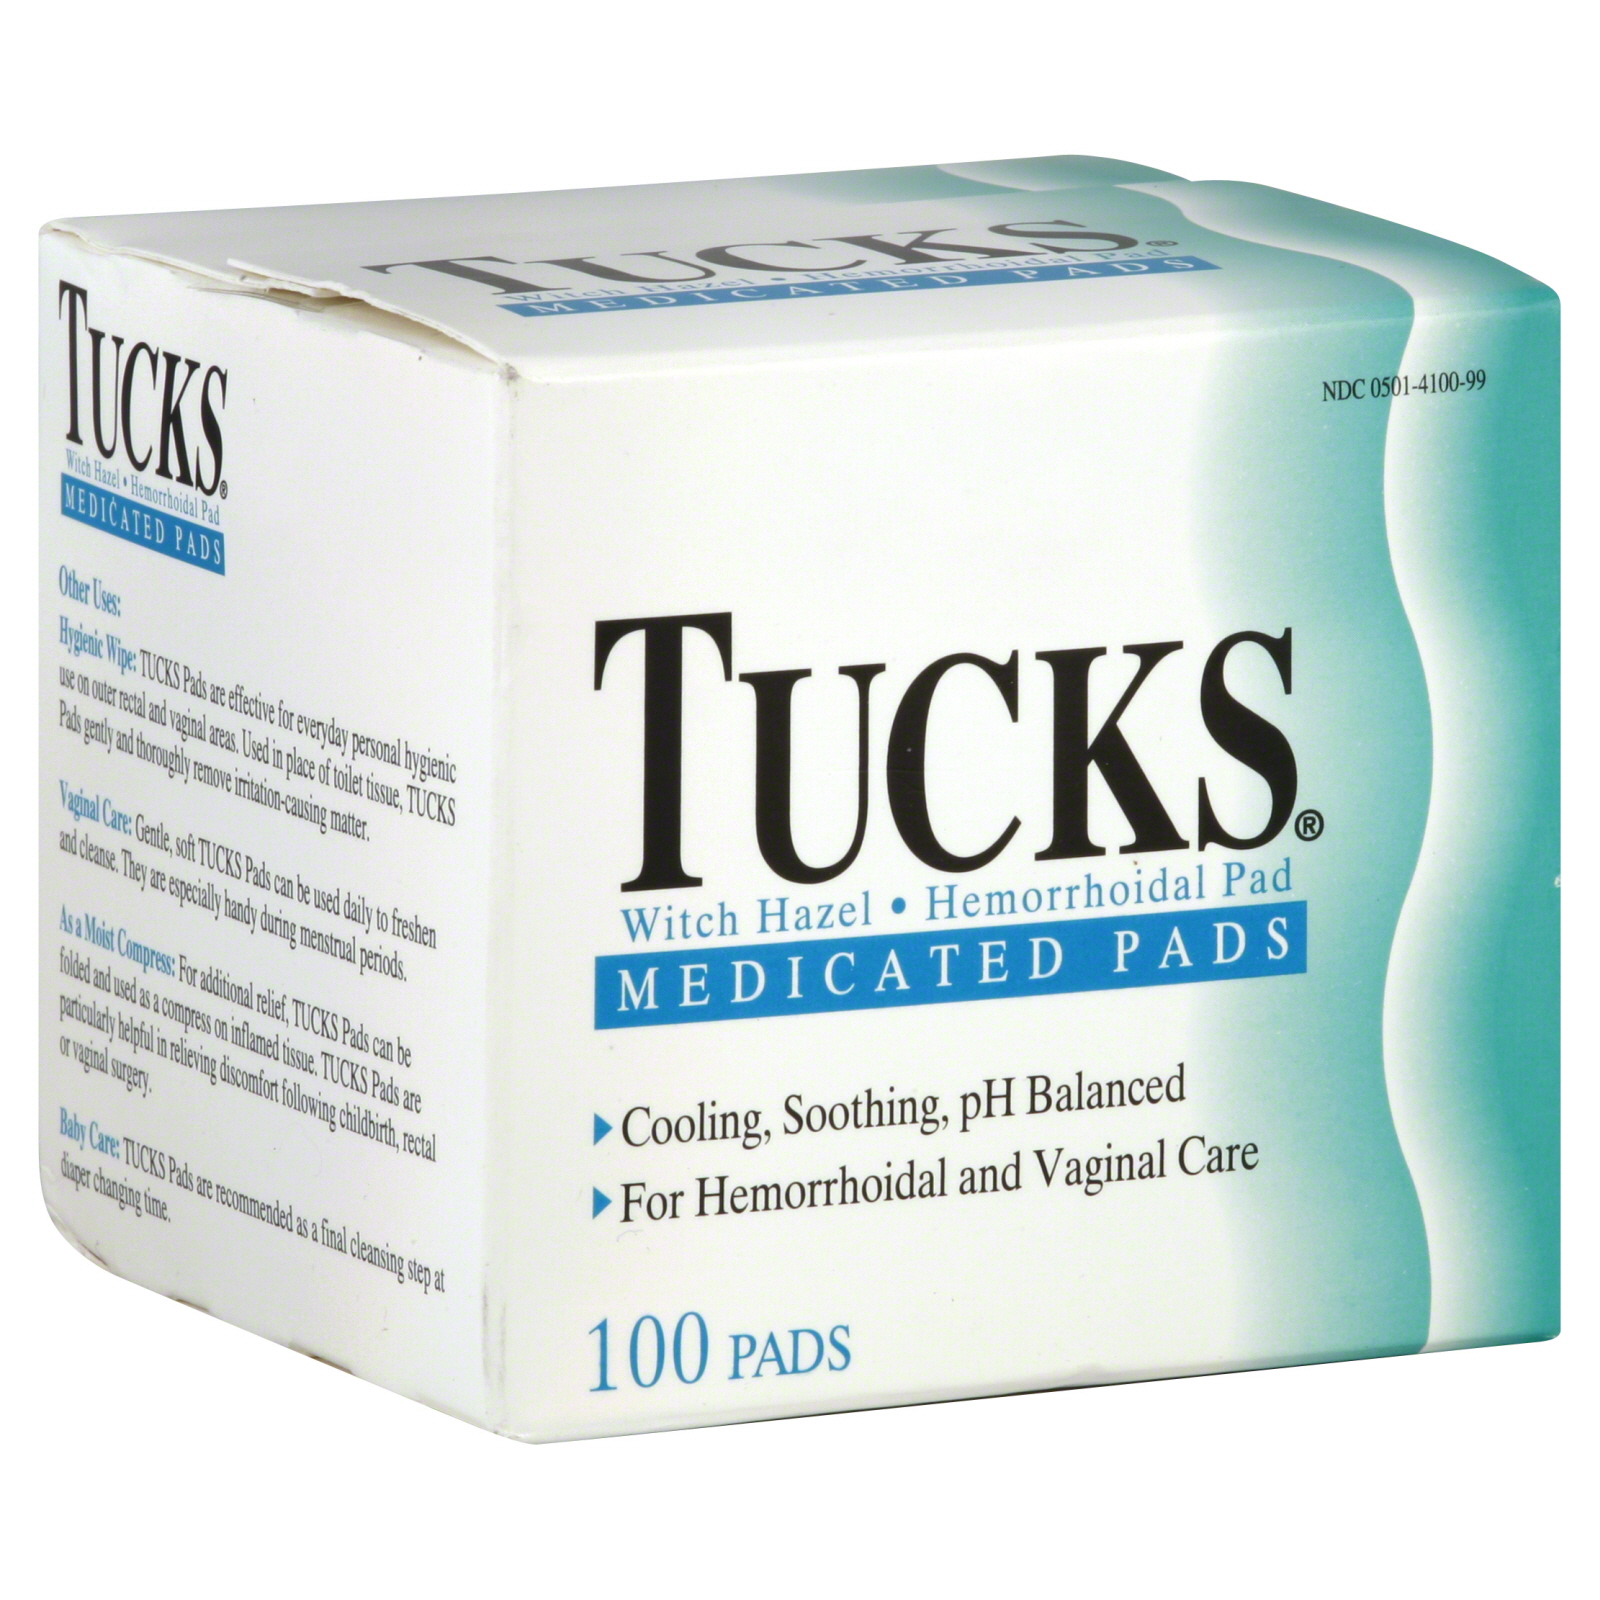 Tucks Medicated Pads, 100 pads